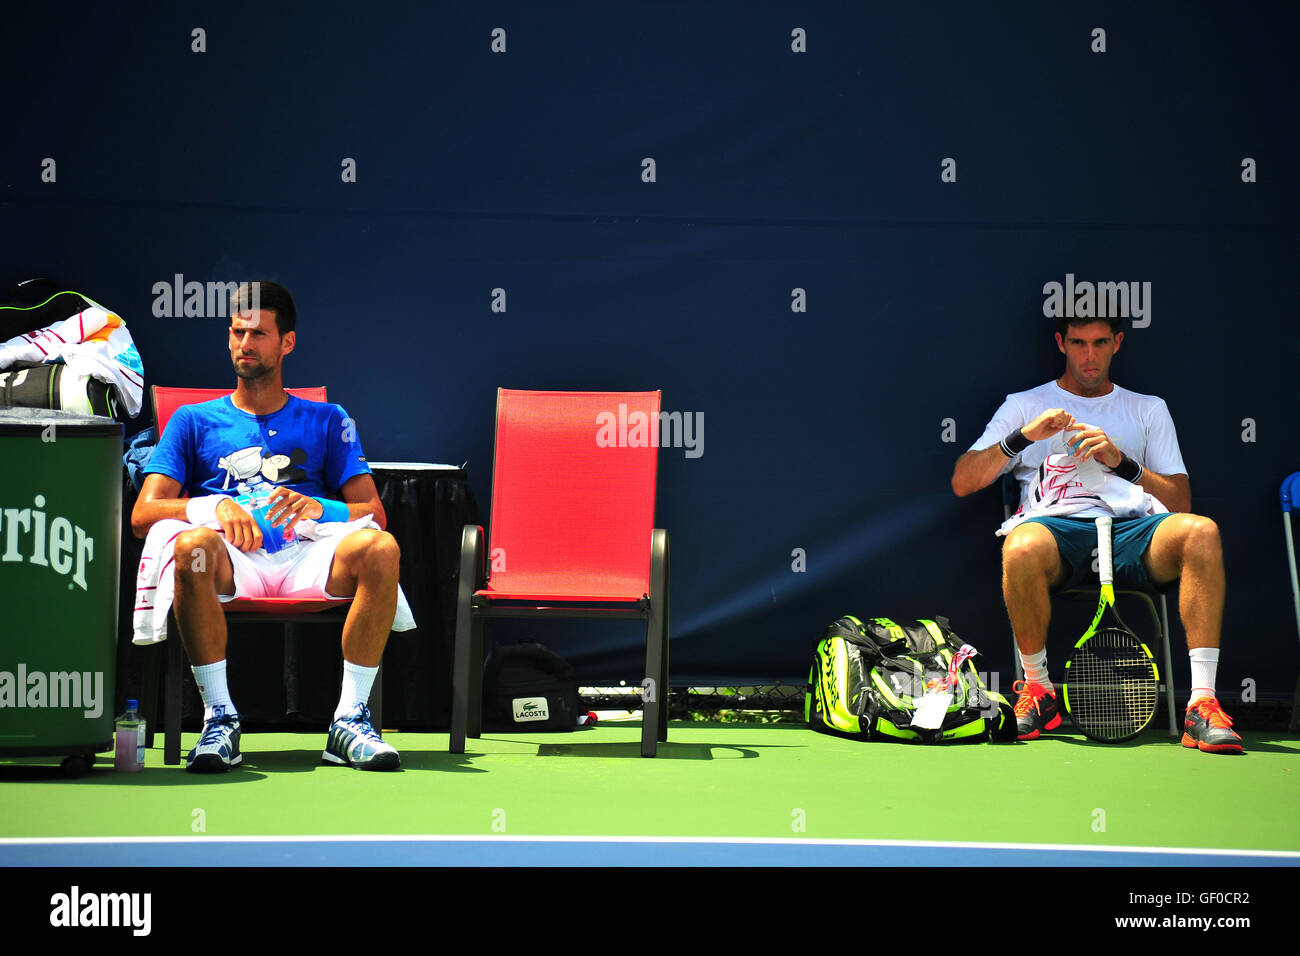 Novak Djokovic praticare al 2016 Toronto aperto Foto Stock